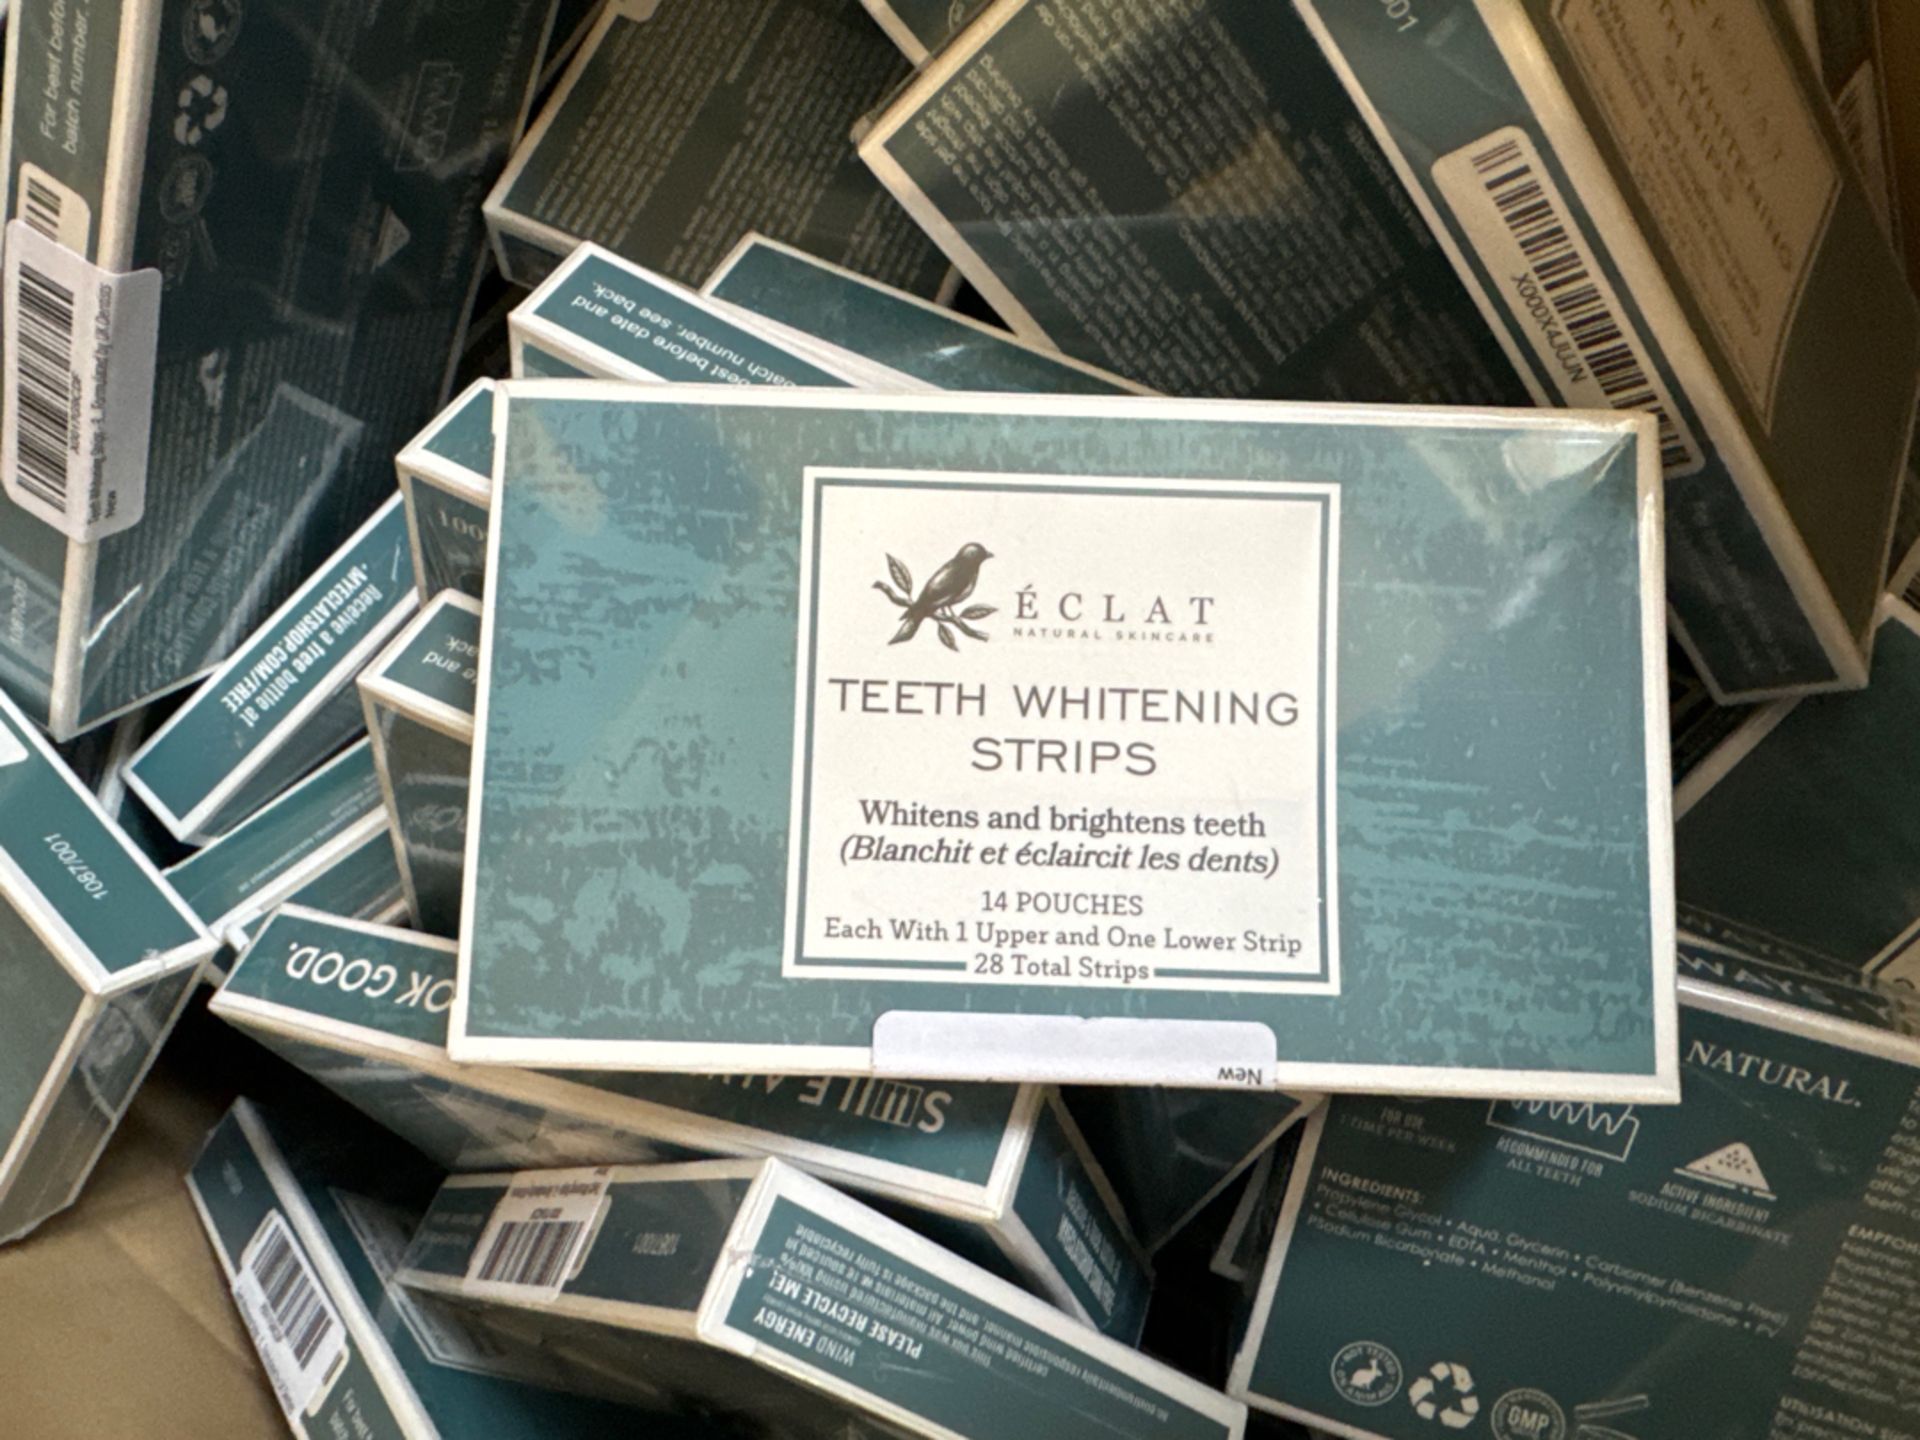 3 Packs (84 strips) of Teeth Whitening Strips by Eclat - NEW - RRP Â£29.97! - Image 3 of 5